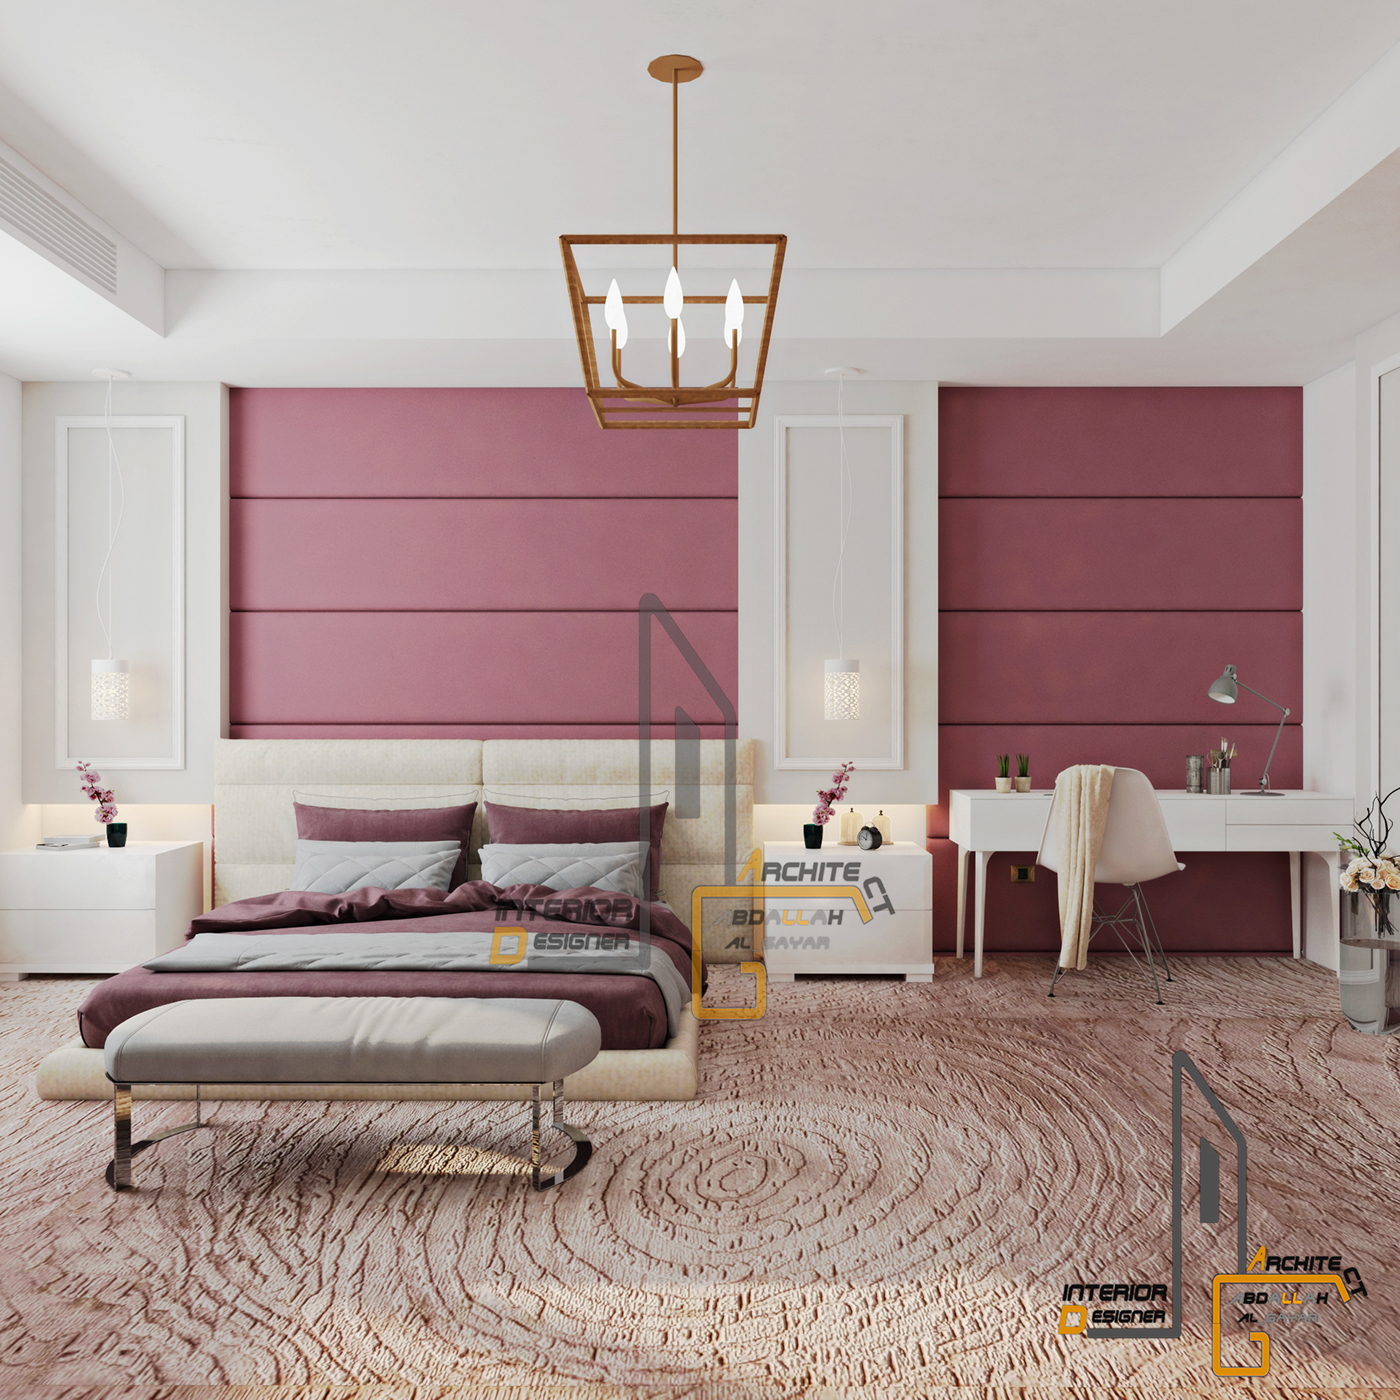 interior deign girl bedroom pink vray visualization colour architecture